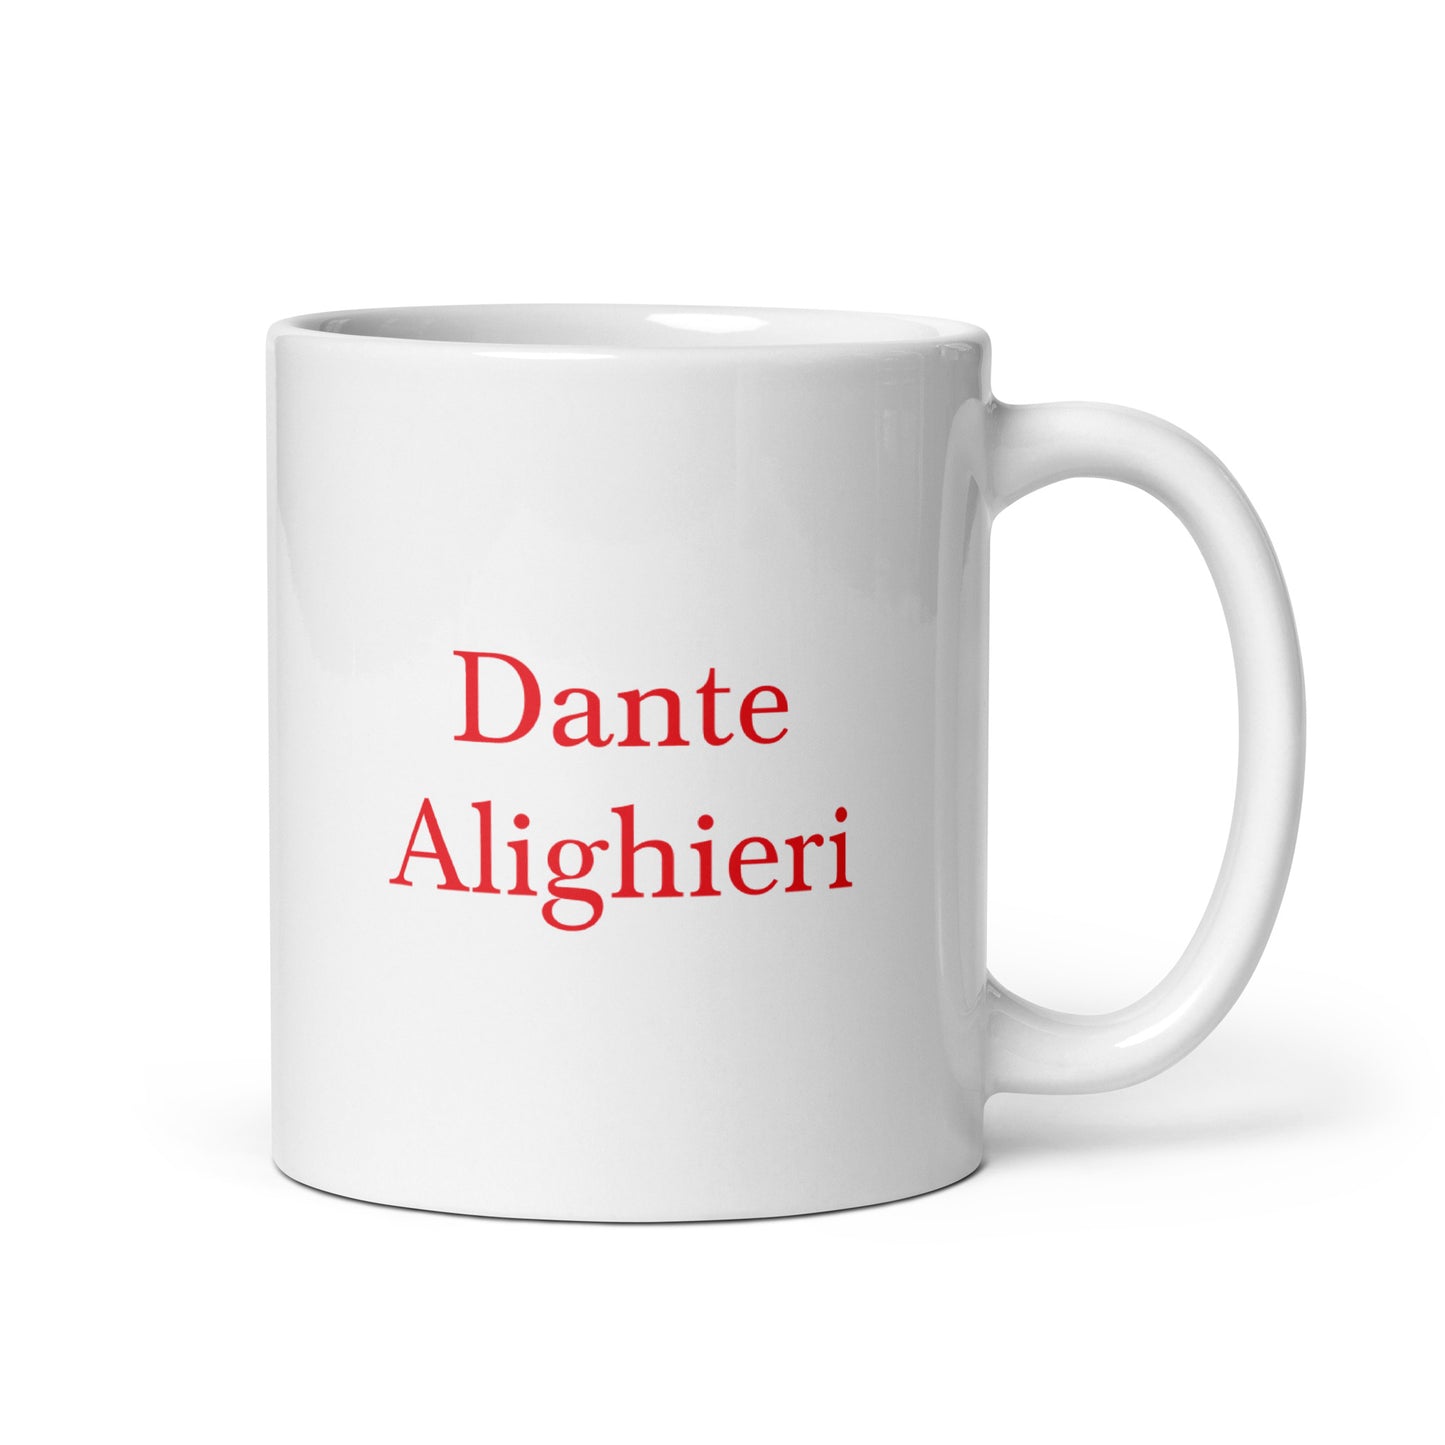 Dante Alighieri white glossy mug